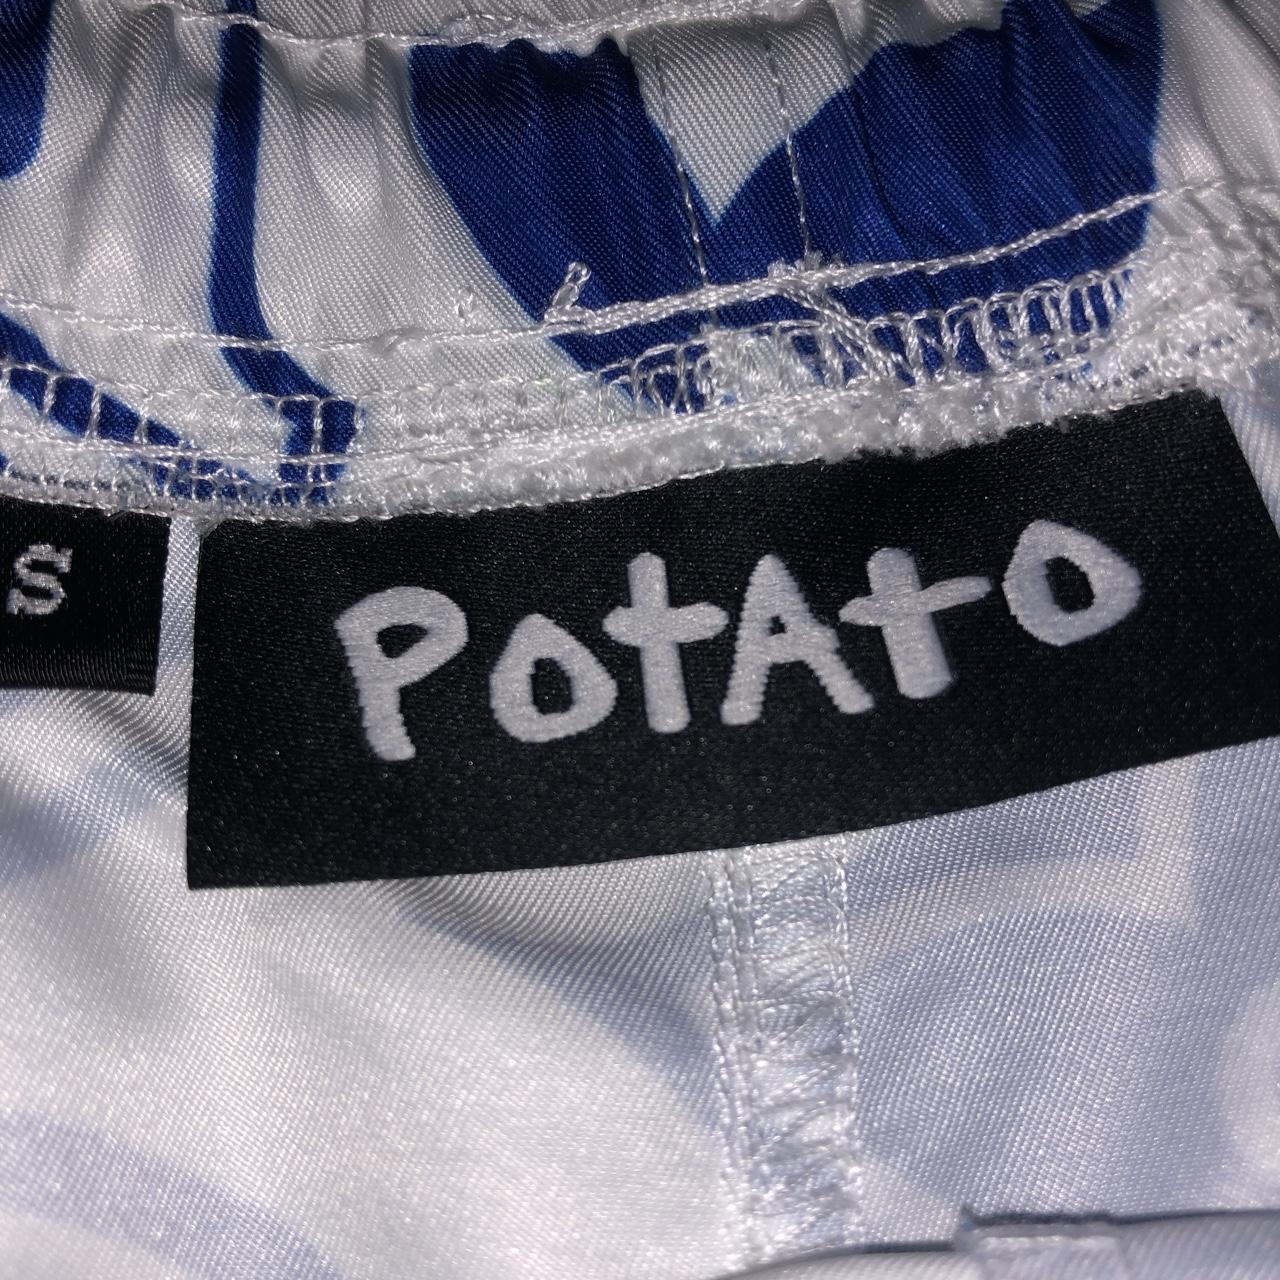 Imran Potato Louis Vuitton Shorts for Sale in Hesperia, CA - OfferUp